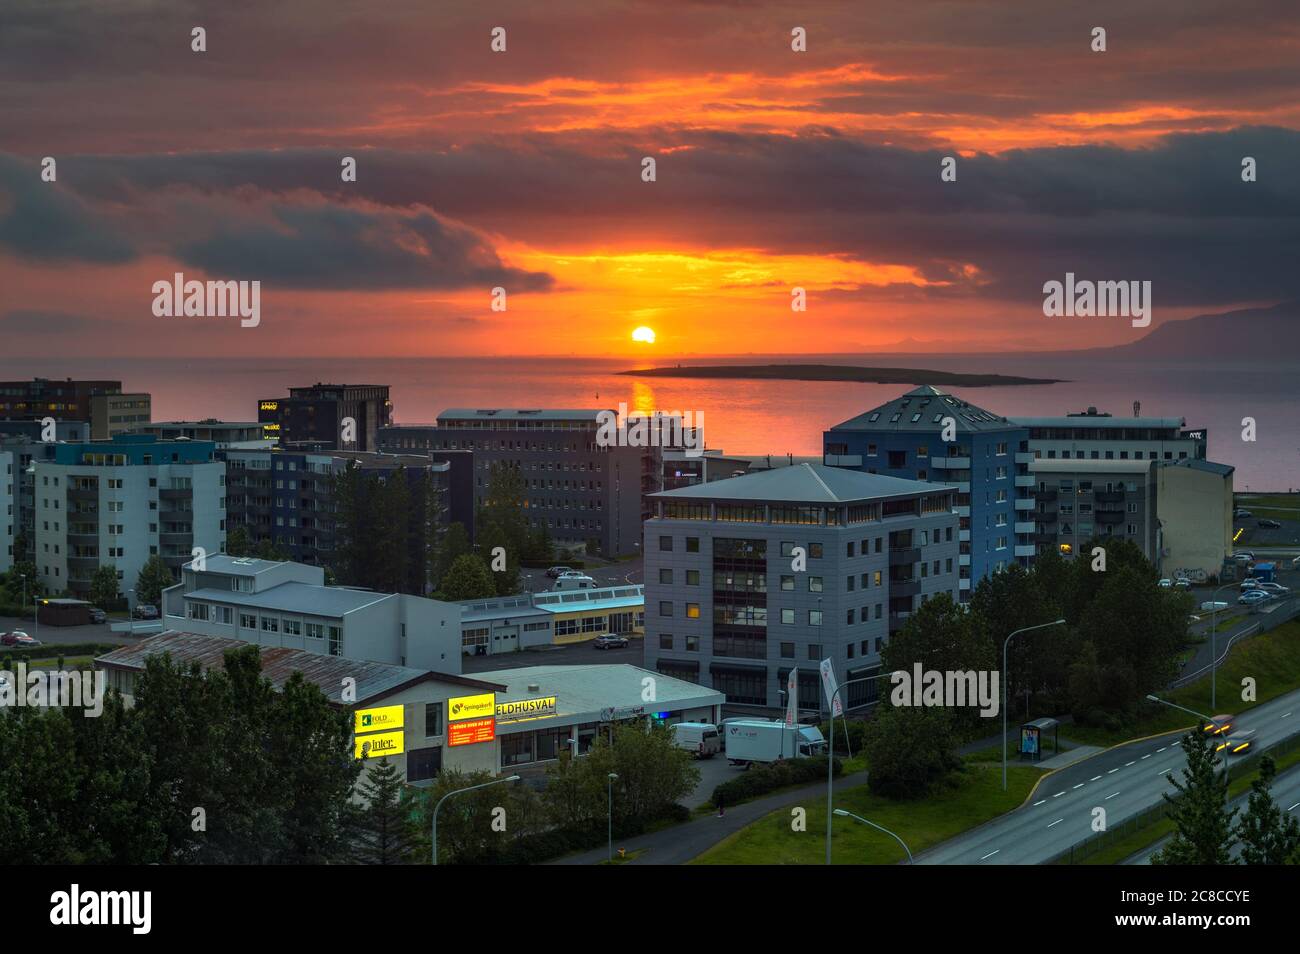 Reykjavik, Iceland - June 30, 2020 : Sunset above the city of Reykjavik with multiple modern buildings and Atlantic Ocean. Stock Photo